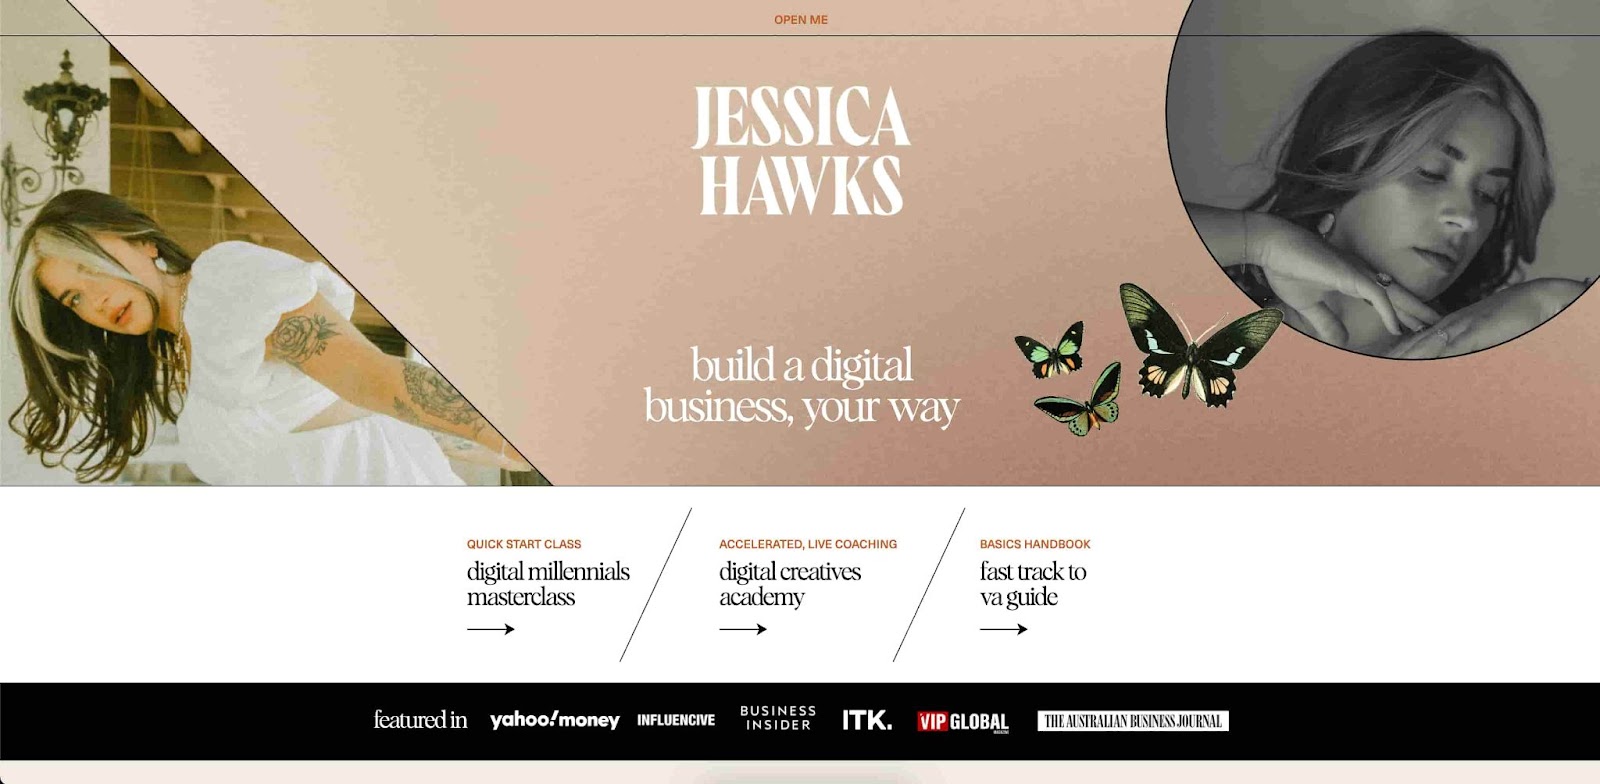 Jessica Hawks virtual assistant website example